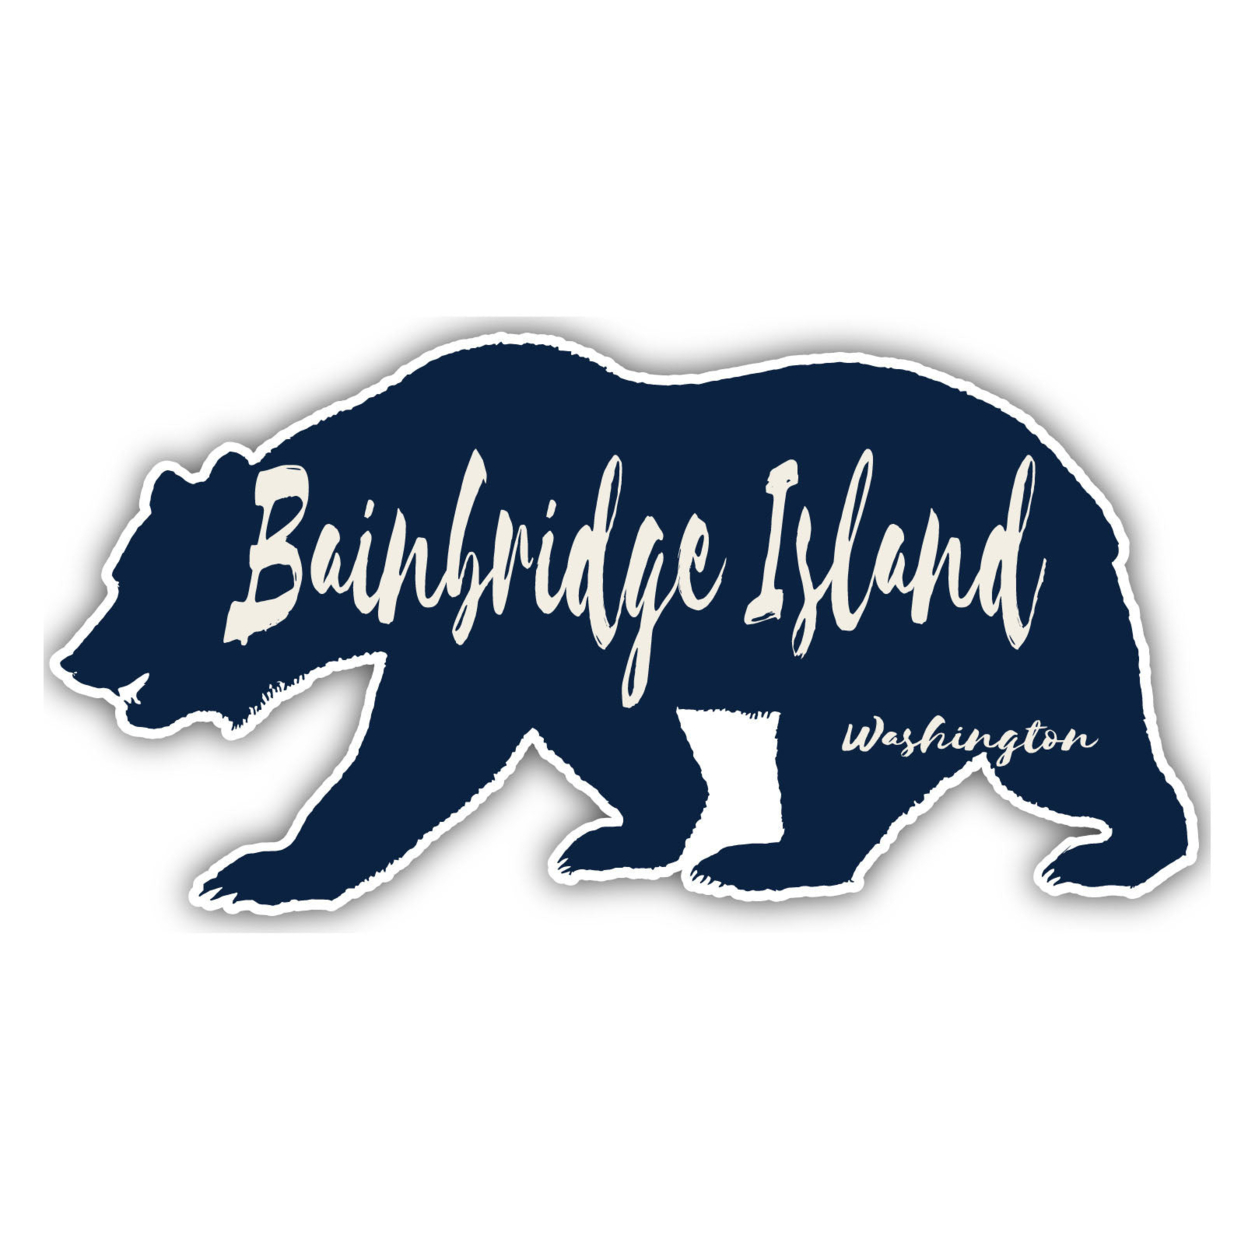 Bainbridge Island Washington Souvenir Decorative Stickers (Choose Theme And Size) - 4-Pack, 6-Inch, Adventures Awaits